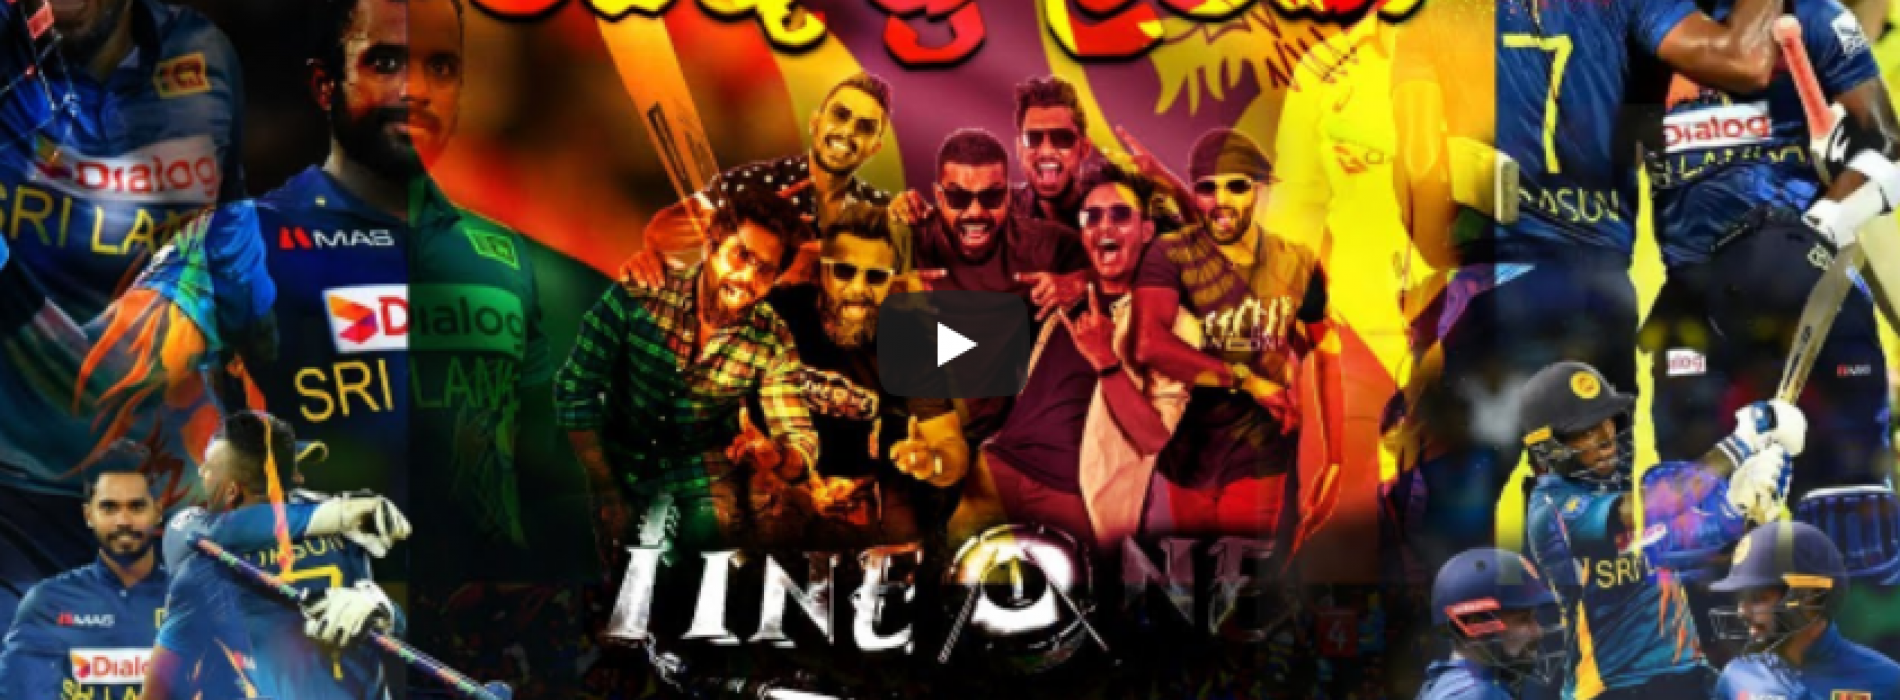 New Music : Dinuma Ape Sri Lanka | දිනුම අපේ ශ්‍රී ලංකා | Cricket Song 2022 | Shane Zing with LineOne Band